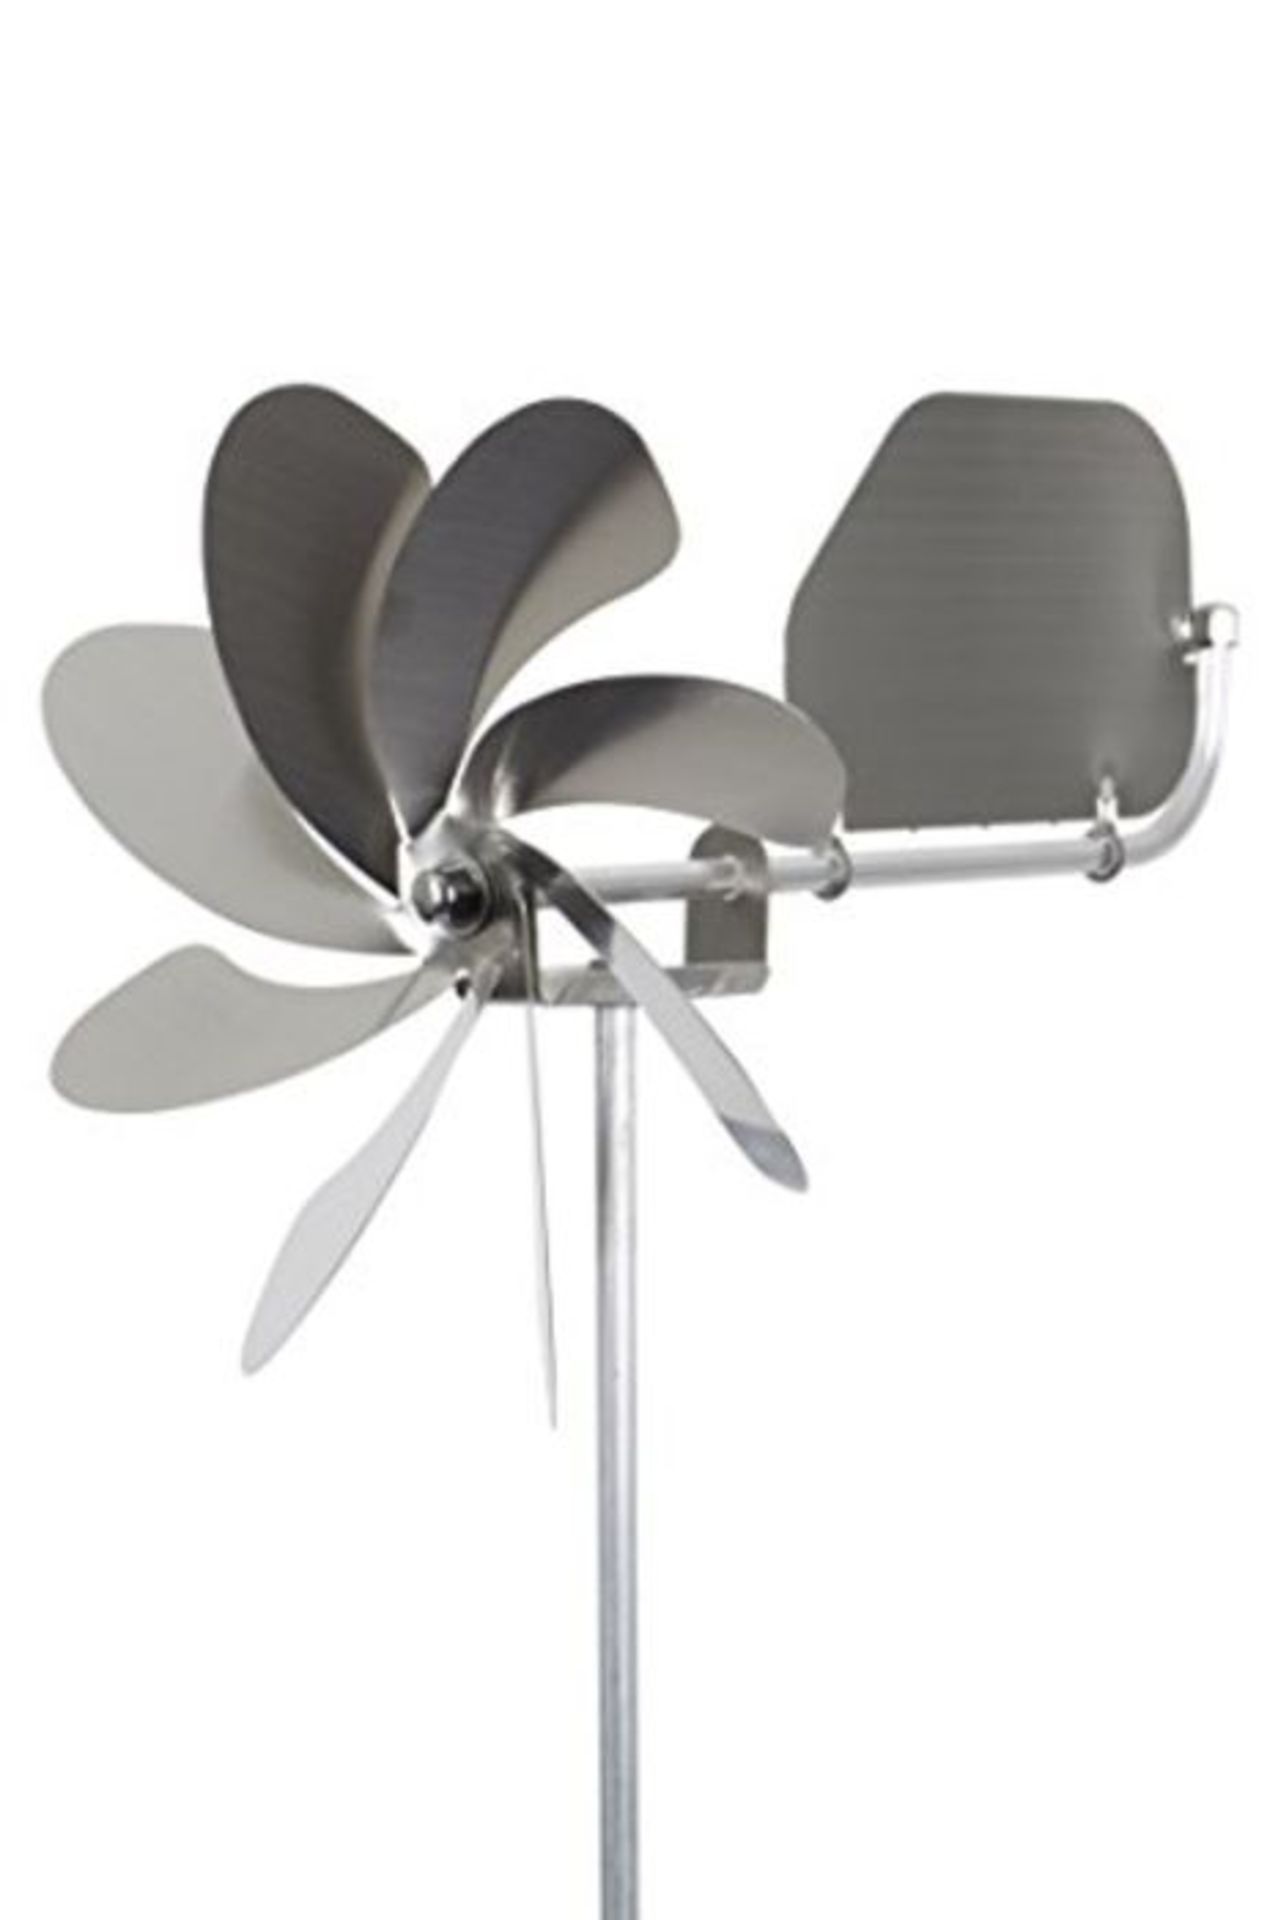 A1004 - STEEL4YOU Pinwheel Windmill SPEEDY20 Plus Stainless Steel 20 cm Rotor Diam